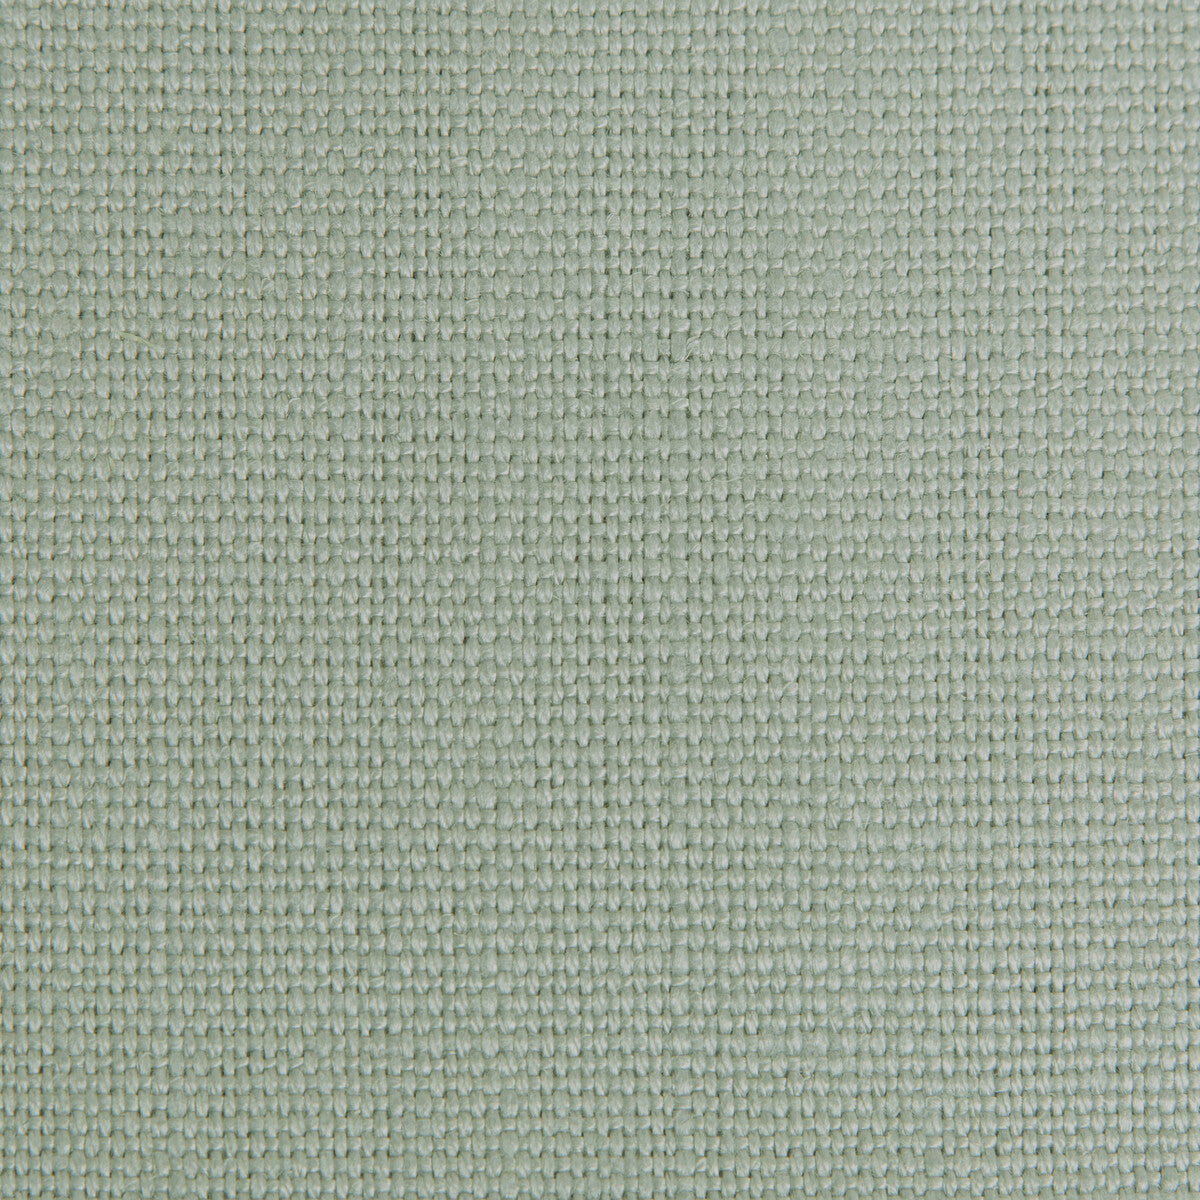 Stone Harbor fabric in aqua color - pattern 27591.2323.0 - by Kravet Basics